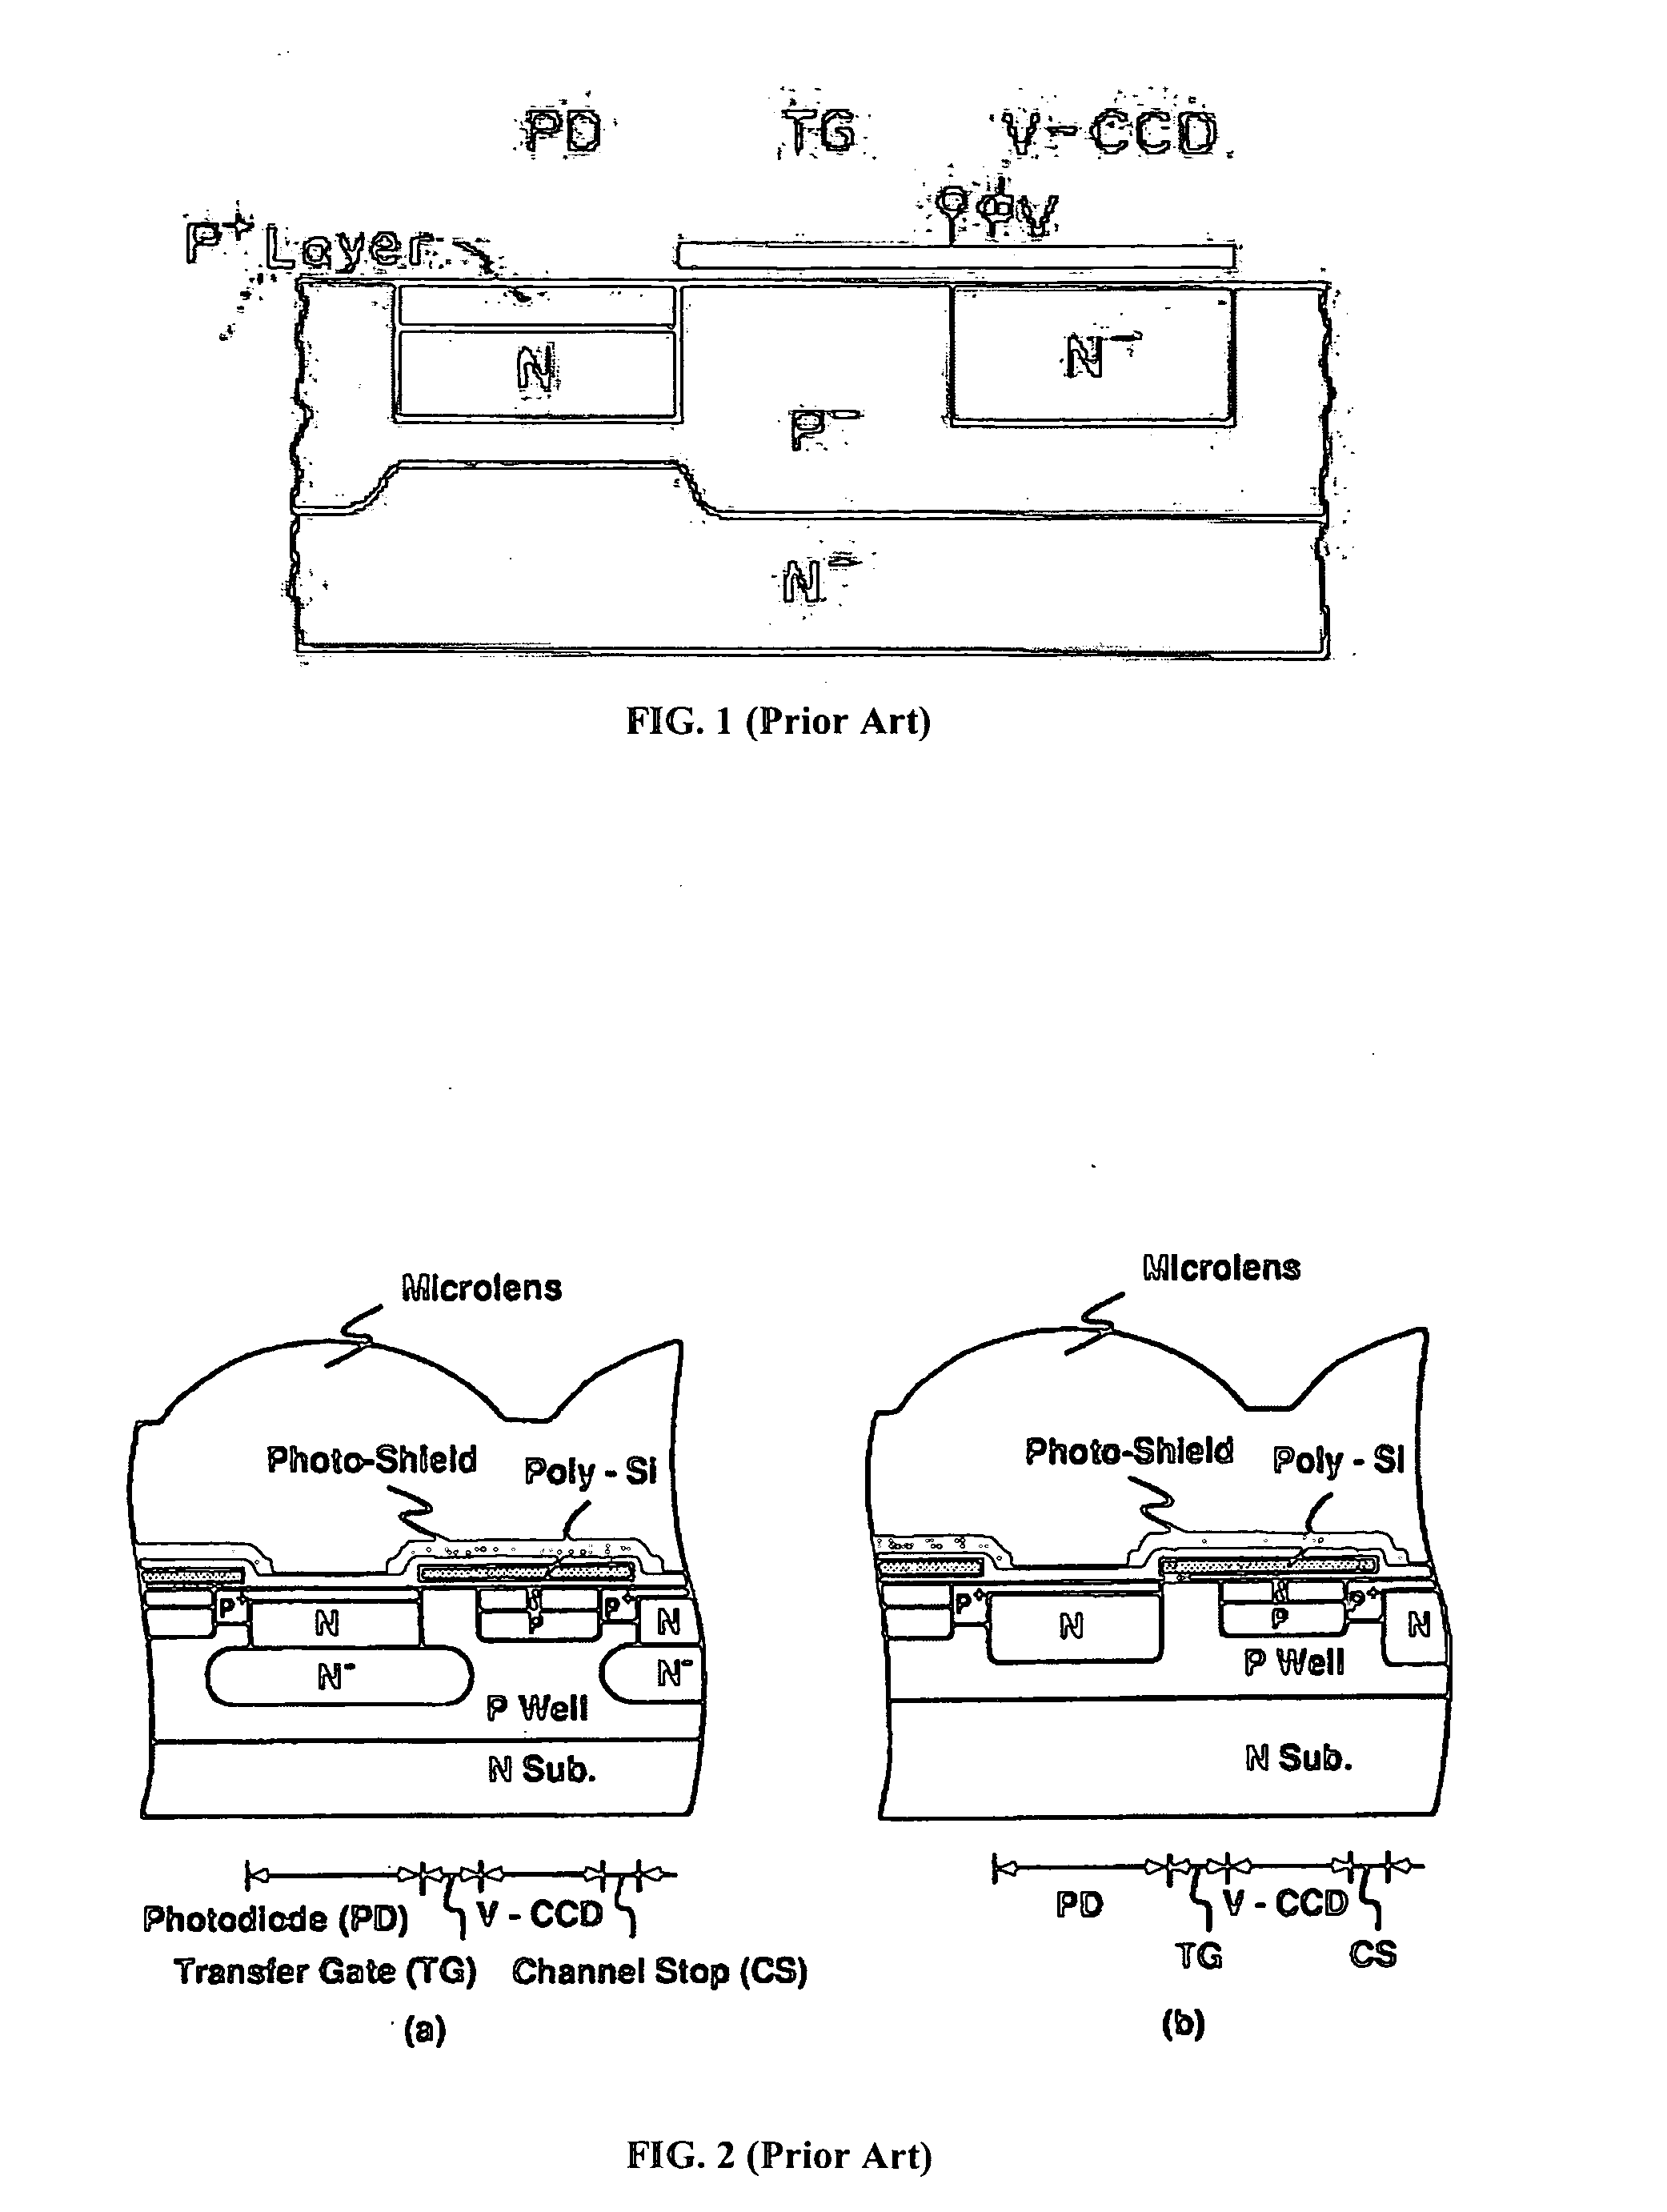 Apparatus and method for reducing dark current